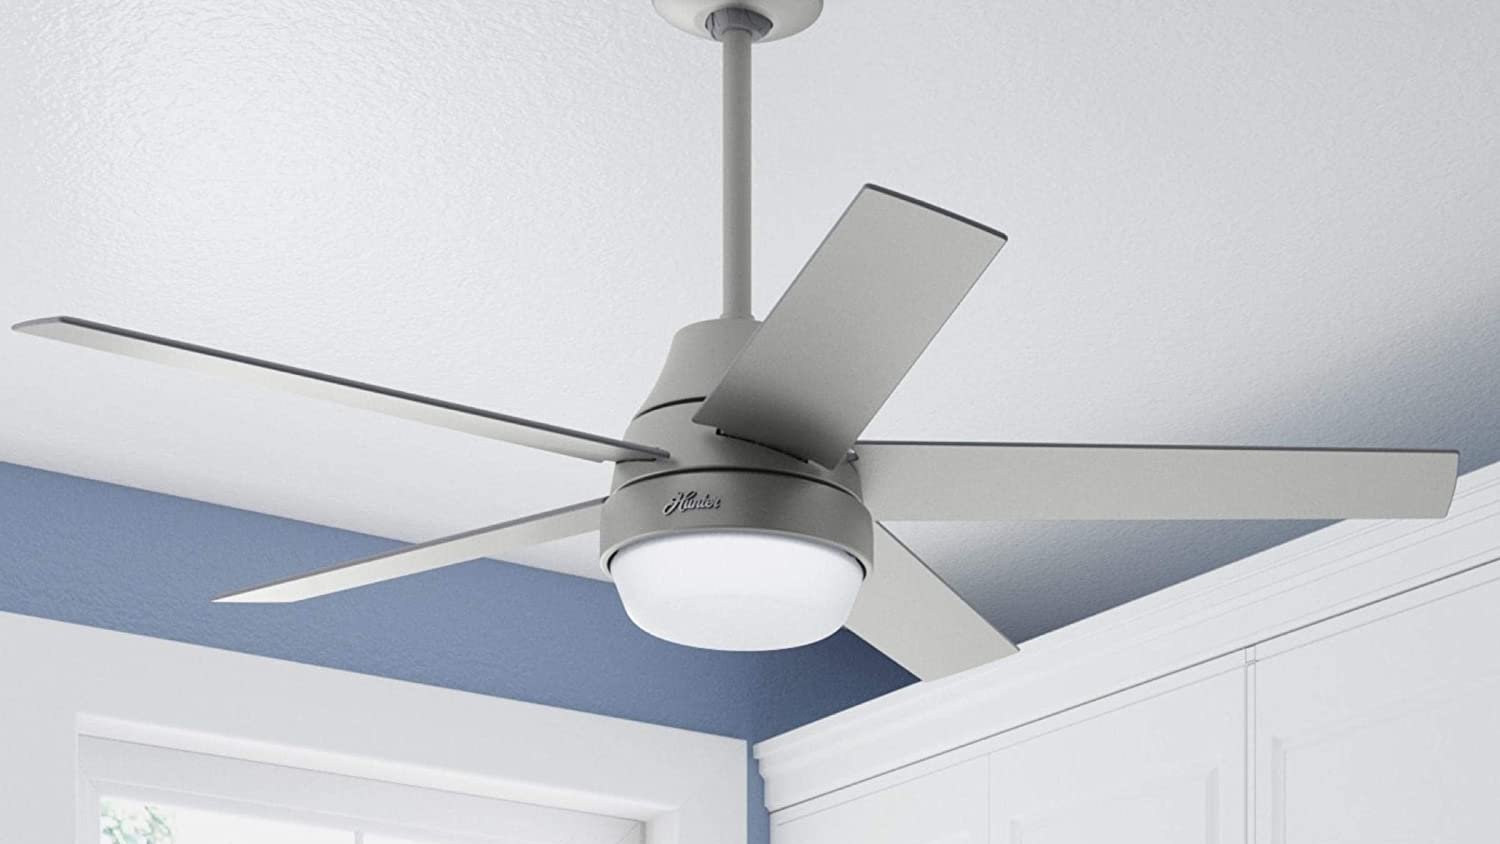 Aerodyne Ceiling Fan Works With Homekit